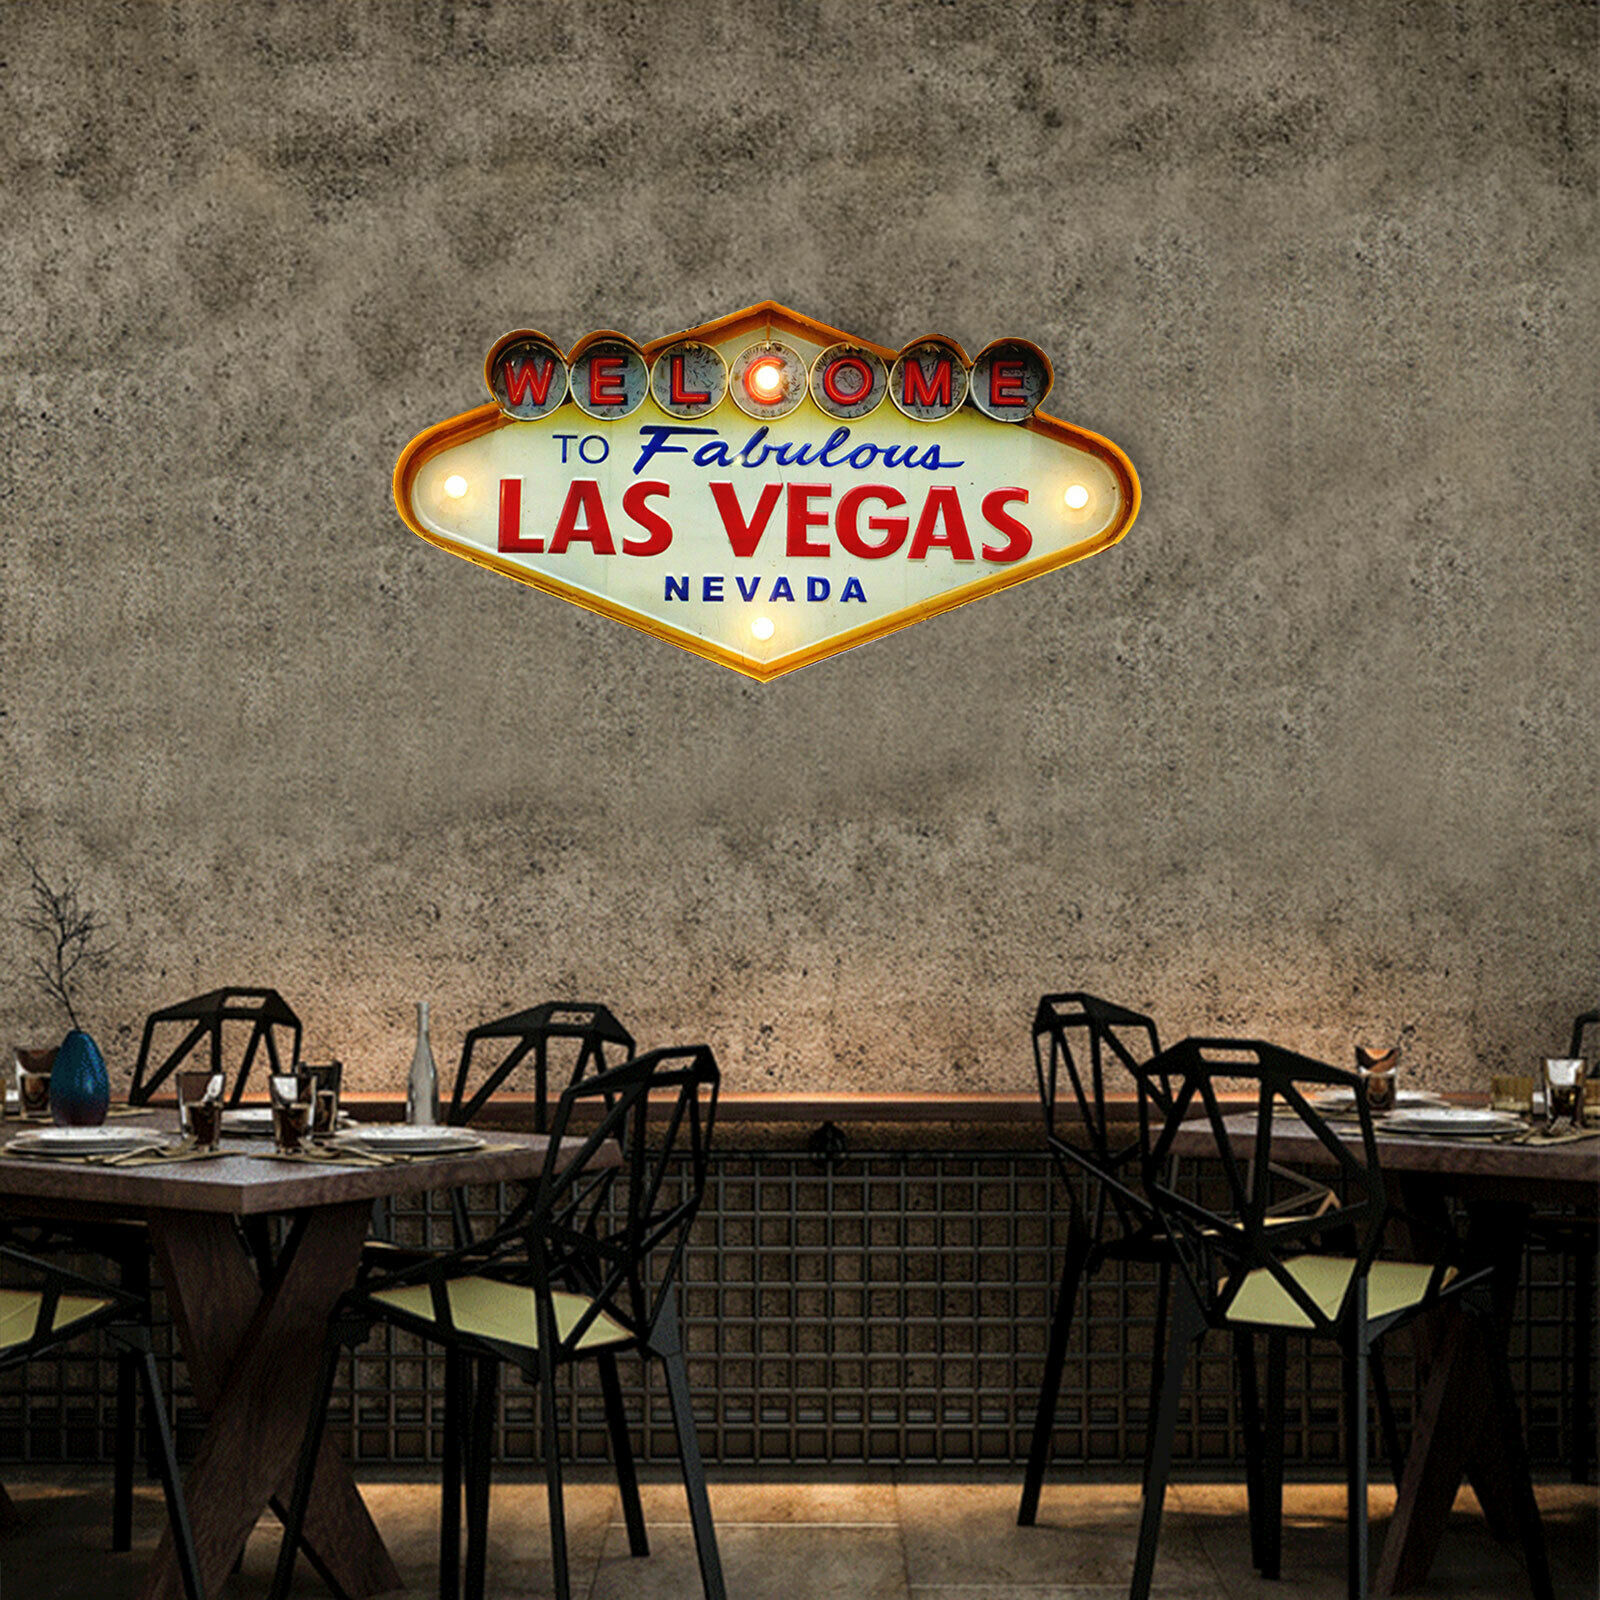 Vintage Welcome to Fabulous Las Vegas Nevada Metal Neon LED Light Beer Bar Sign